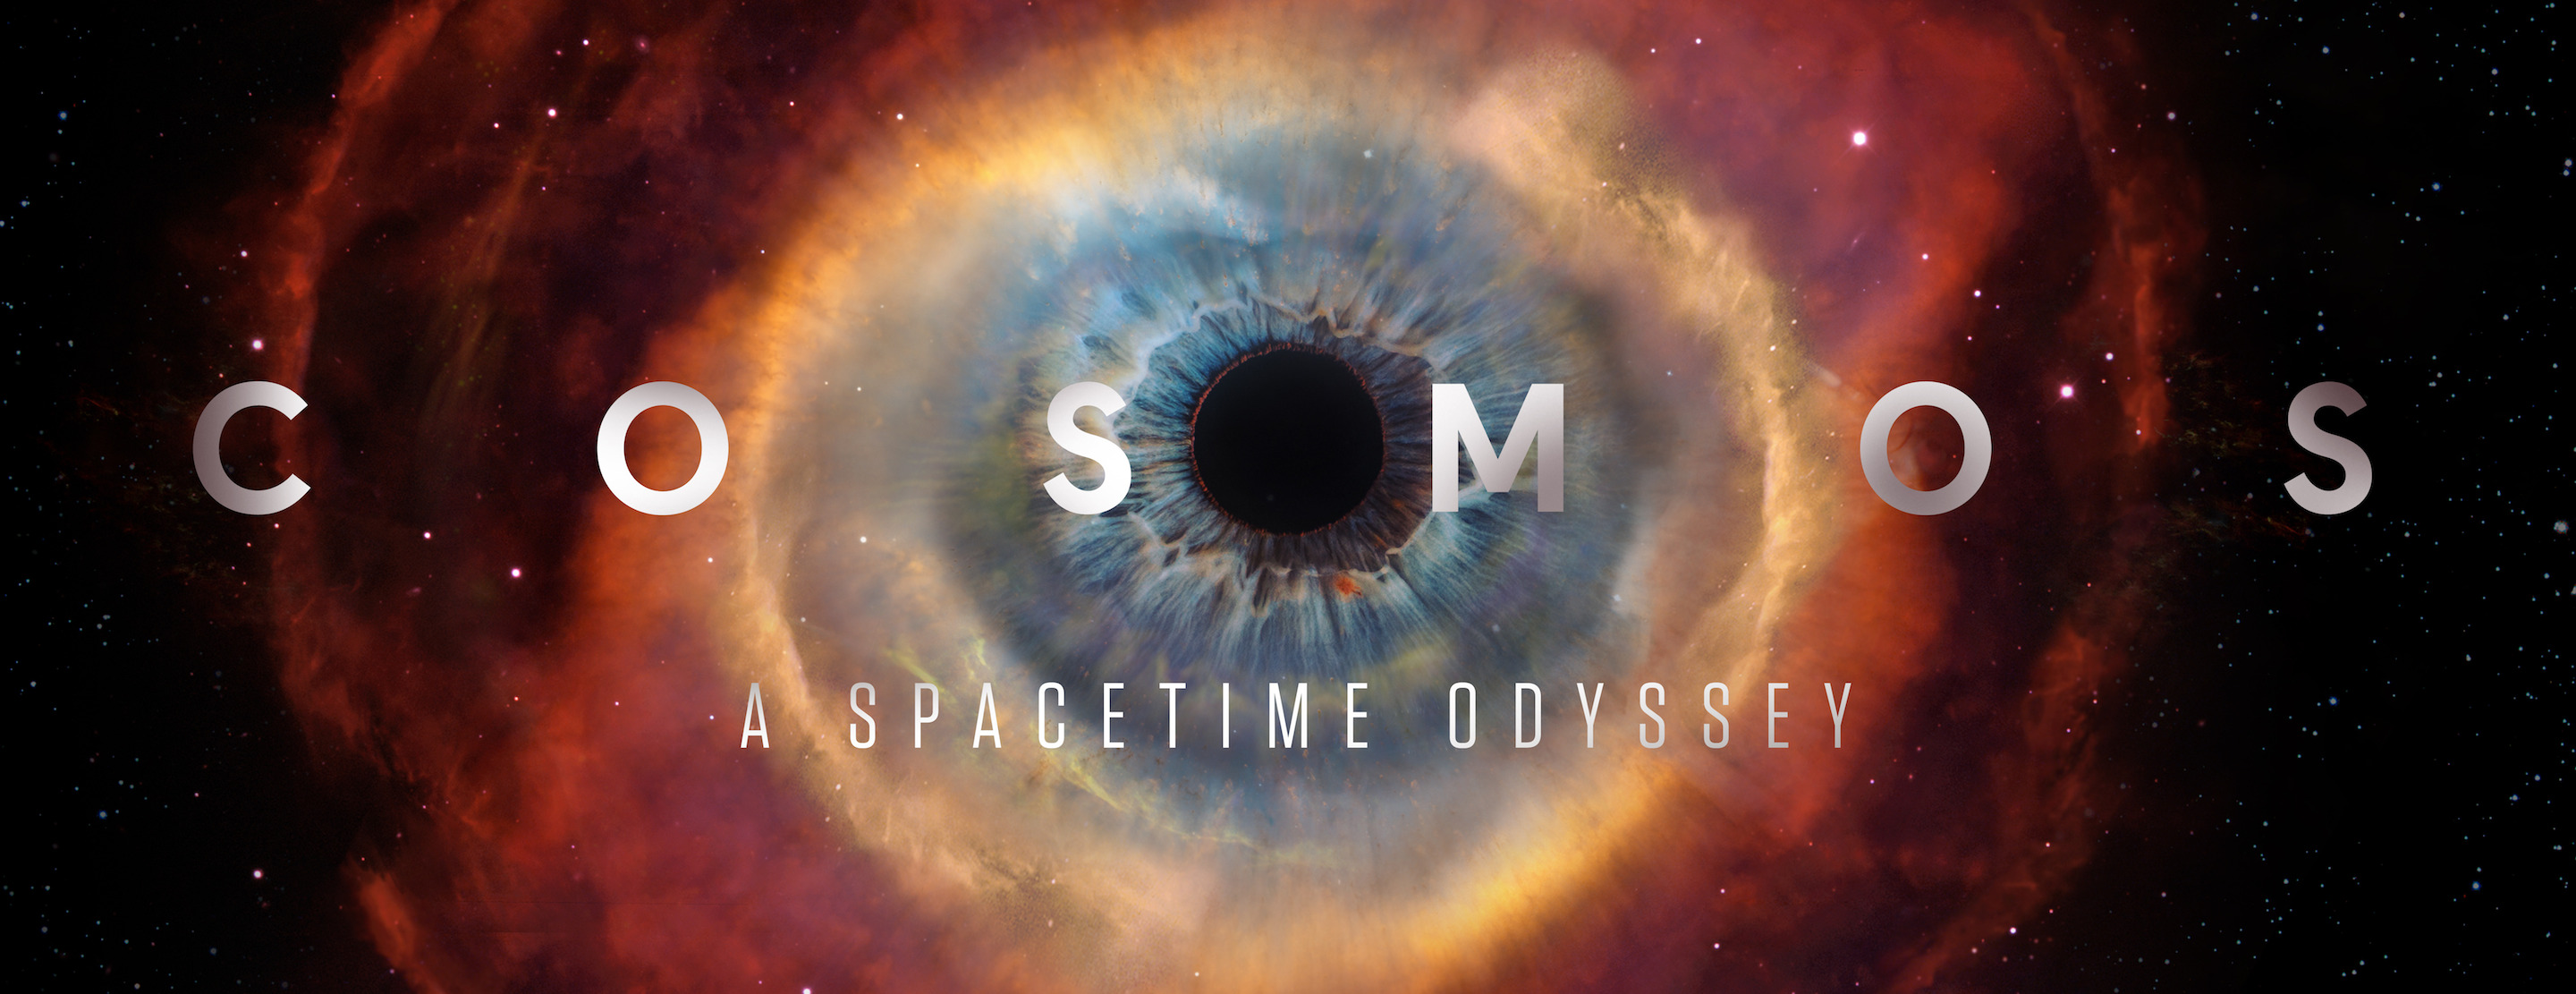 Eye Of God Cosmos - HD Wallpaper 